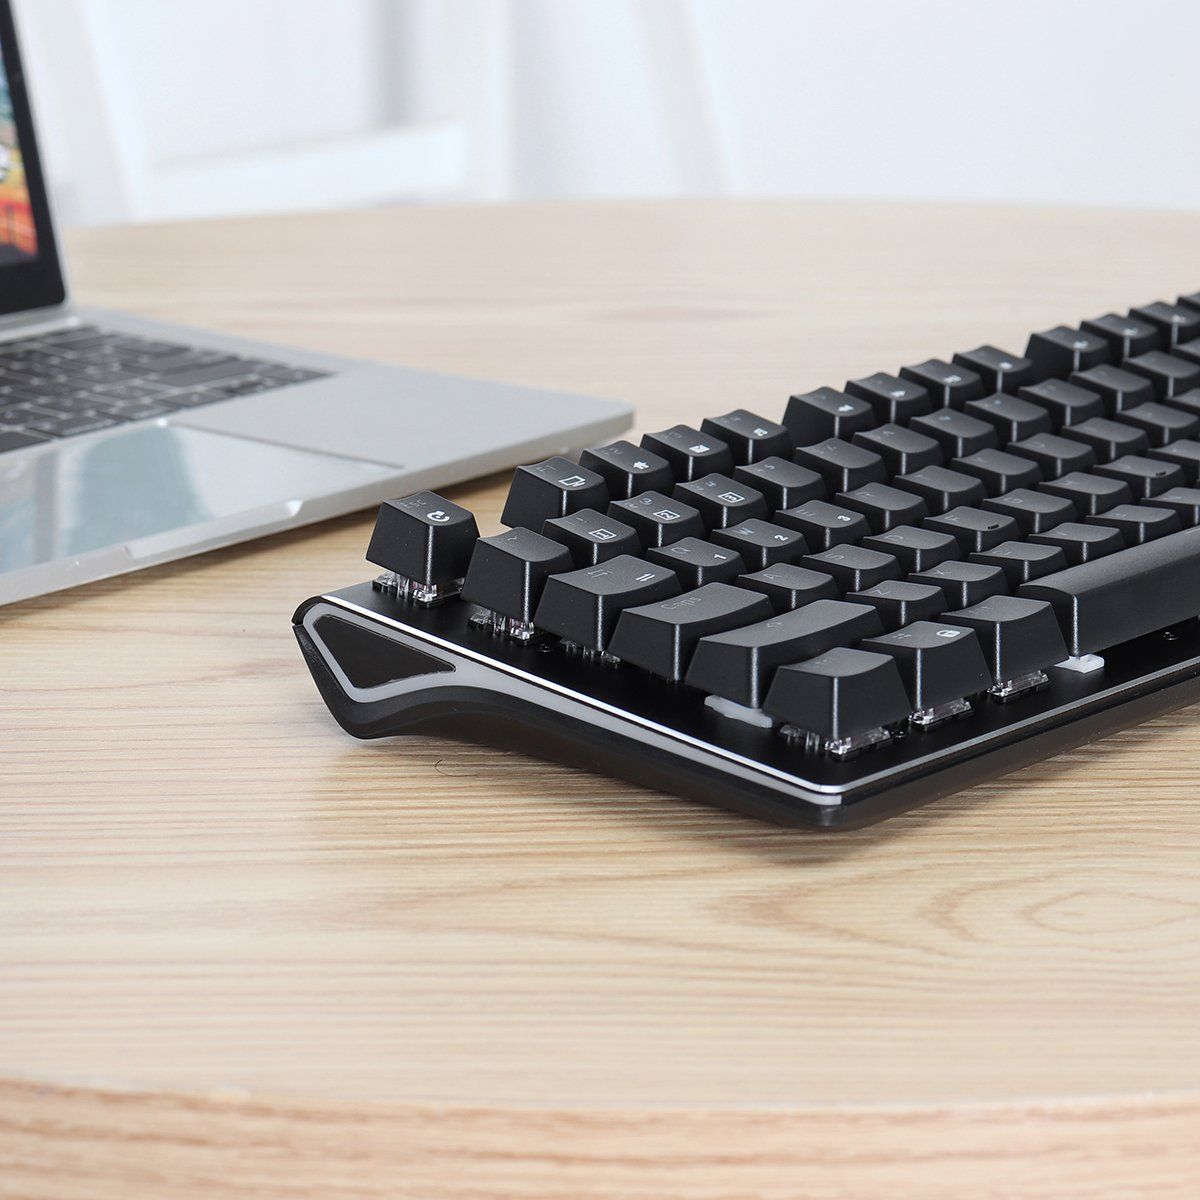 87-Keys-Dual-Mode-Mechanical-Keyboard-Type-C-WiredWireless-bluetooth-30-Gaming-Keyboard-with-RGB-Bac-1740753